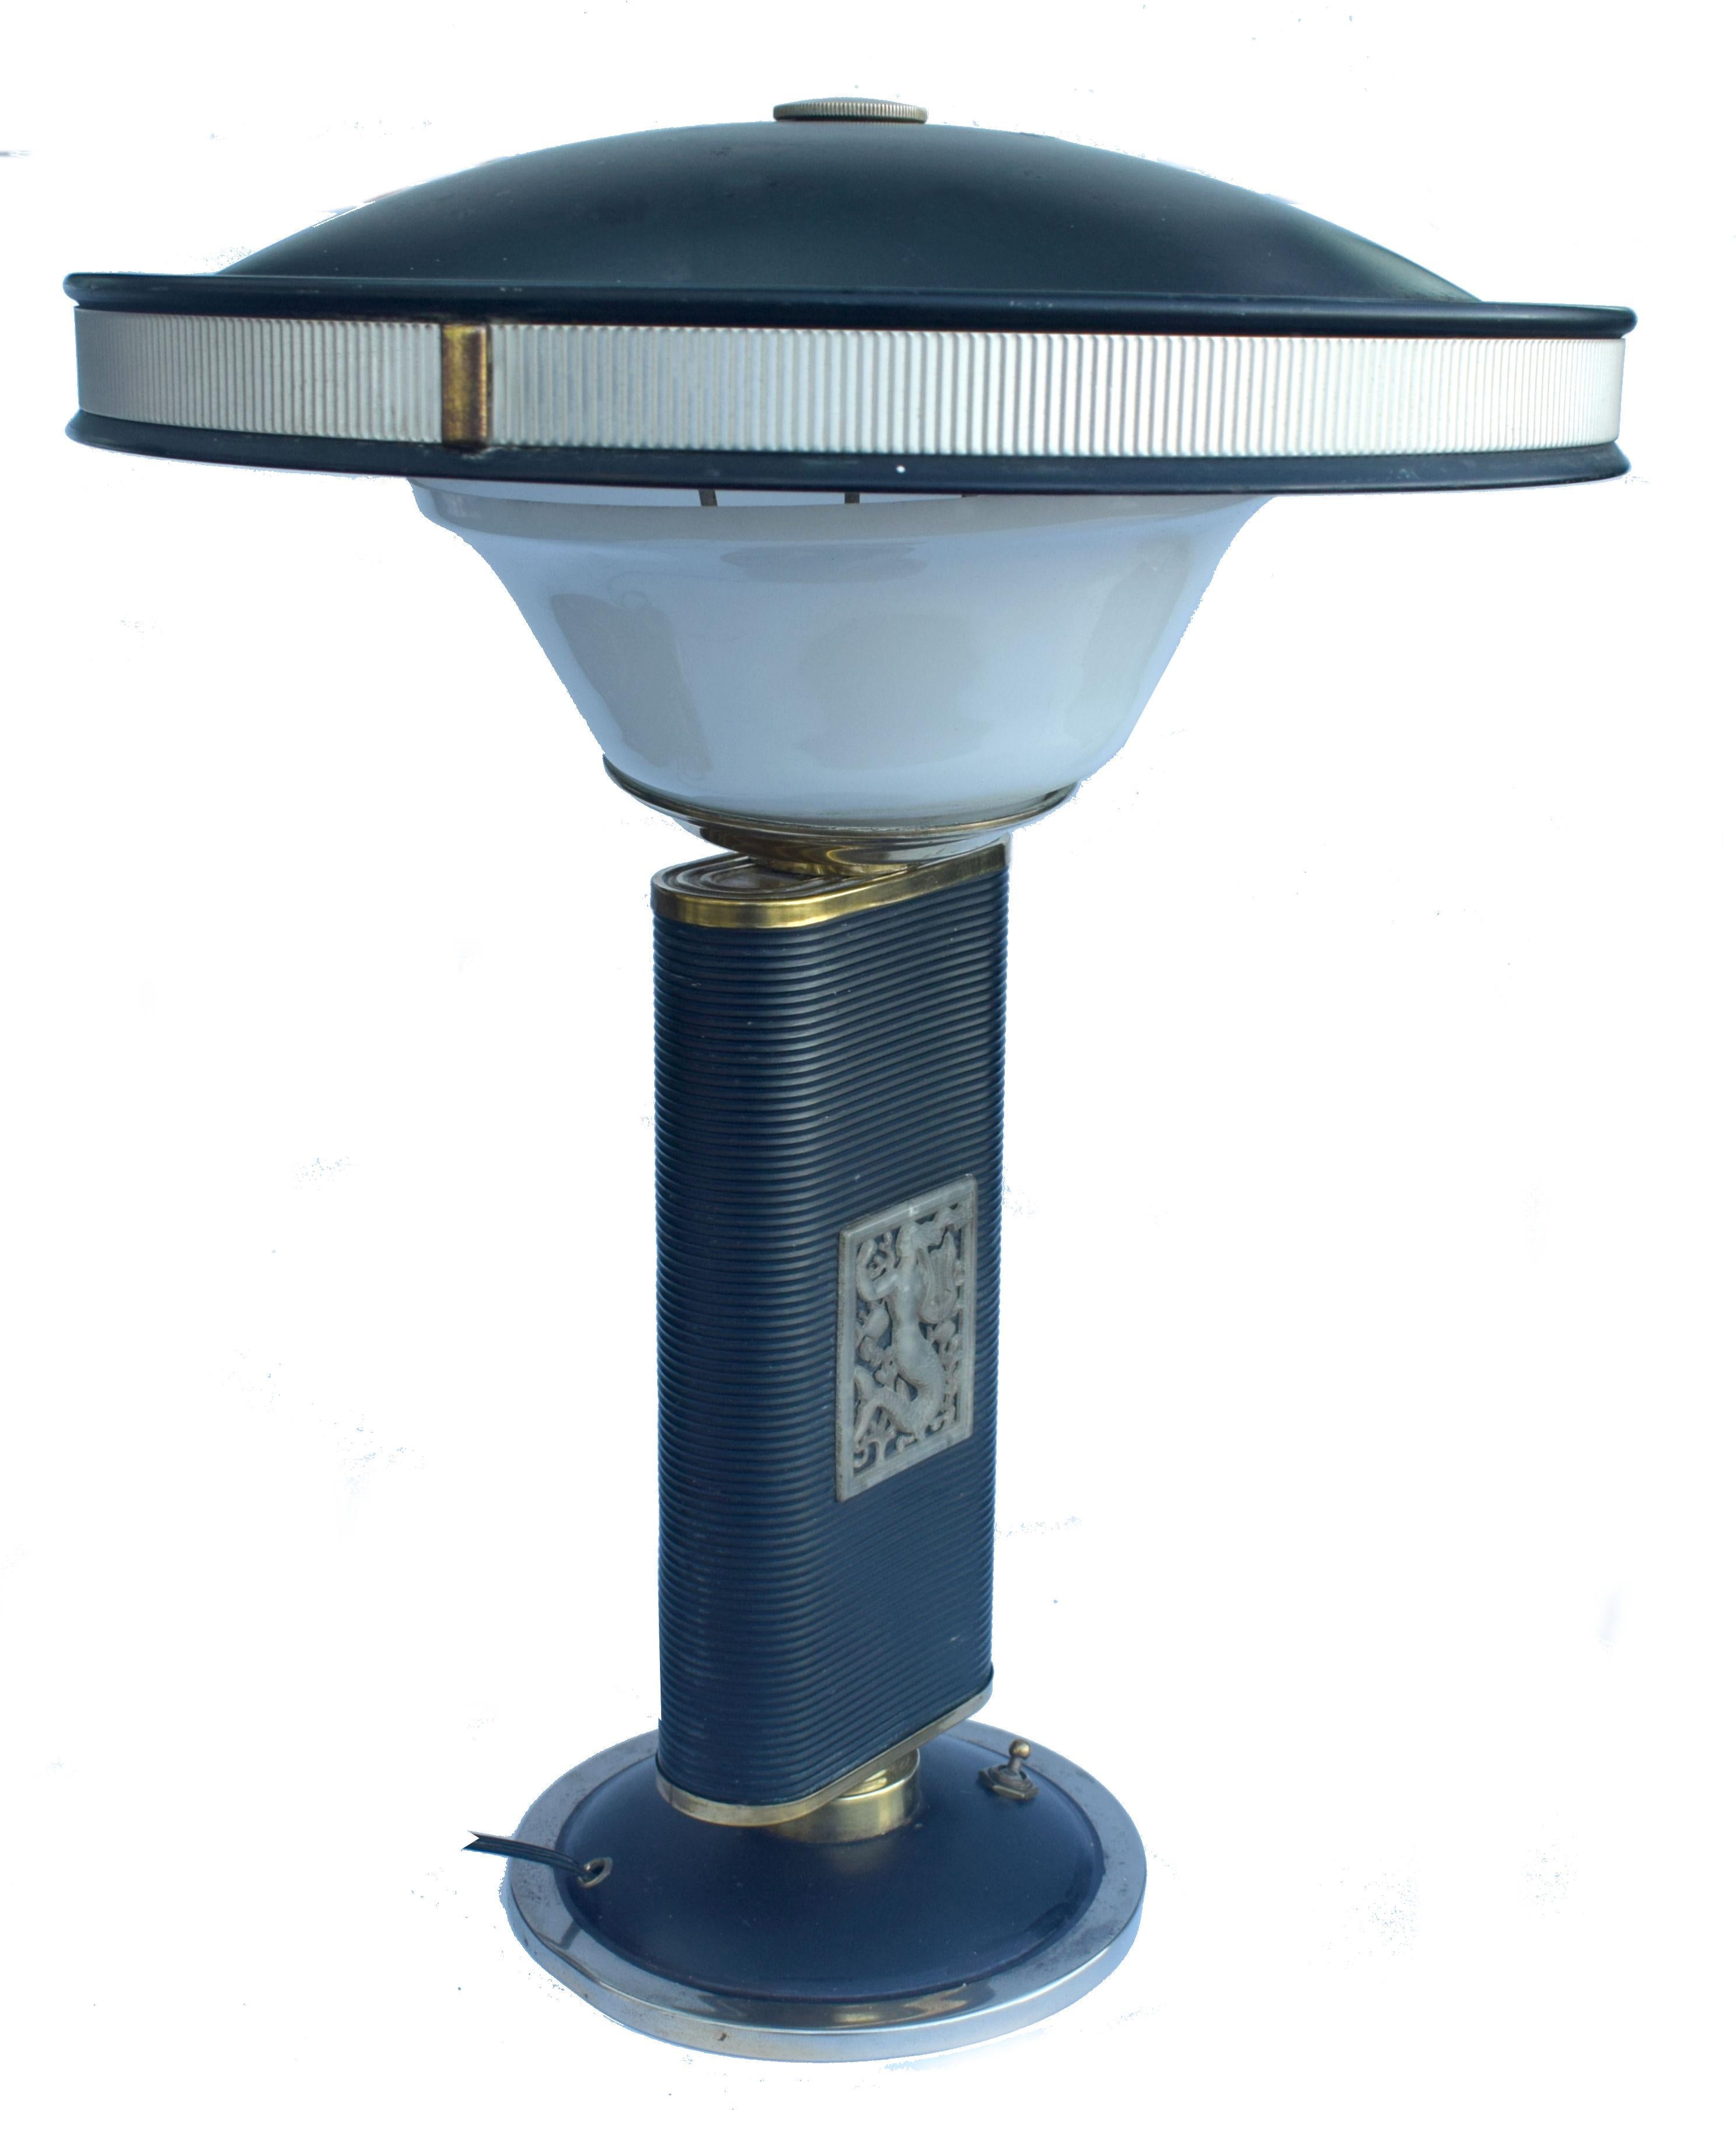 tiffany style table lamp